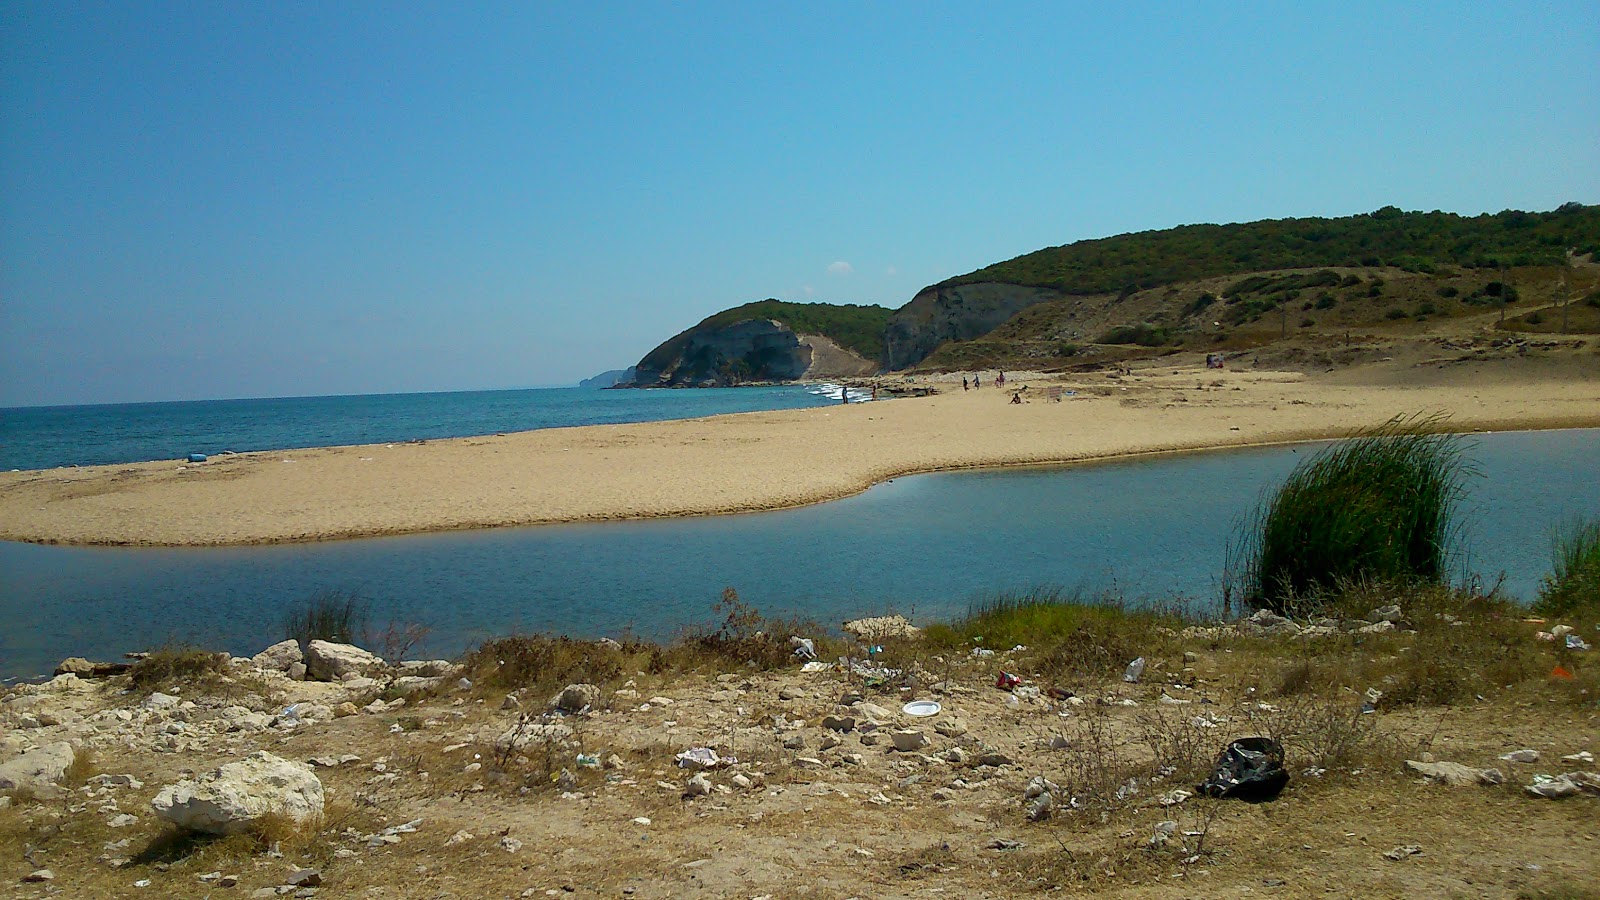 Foto af Kiyikoy beach II vildt område